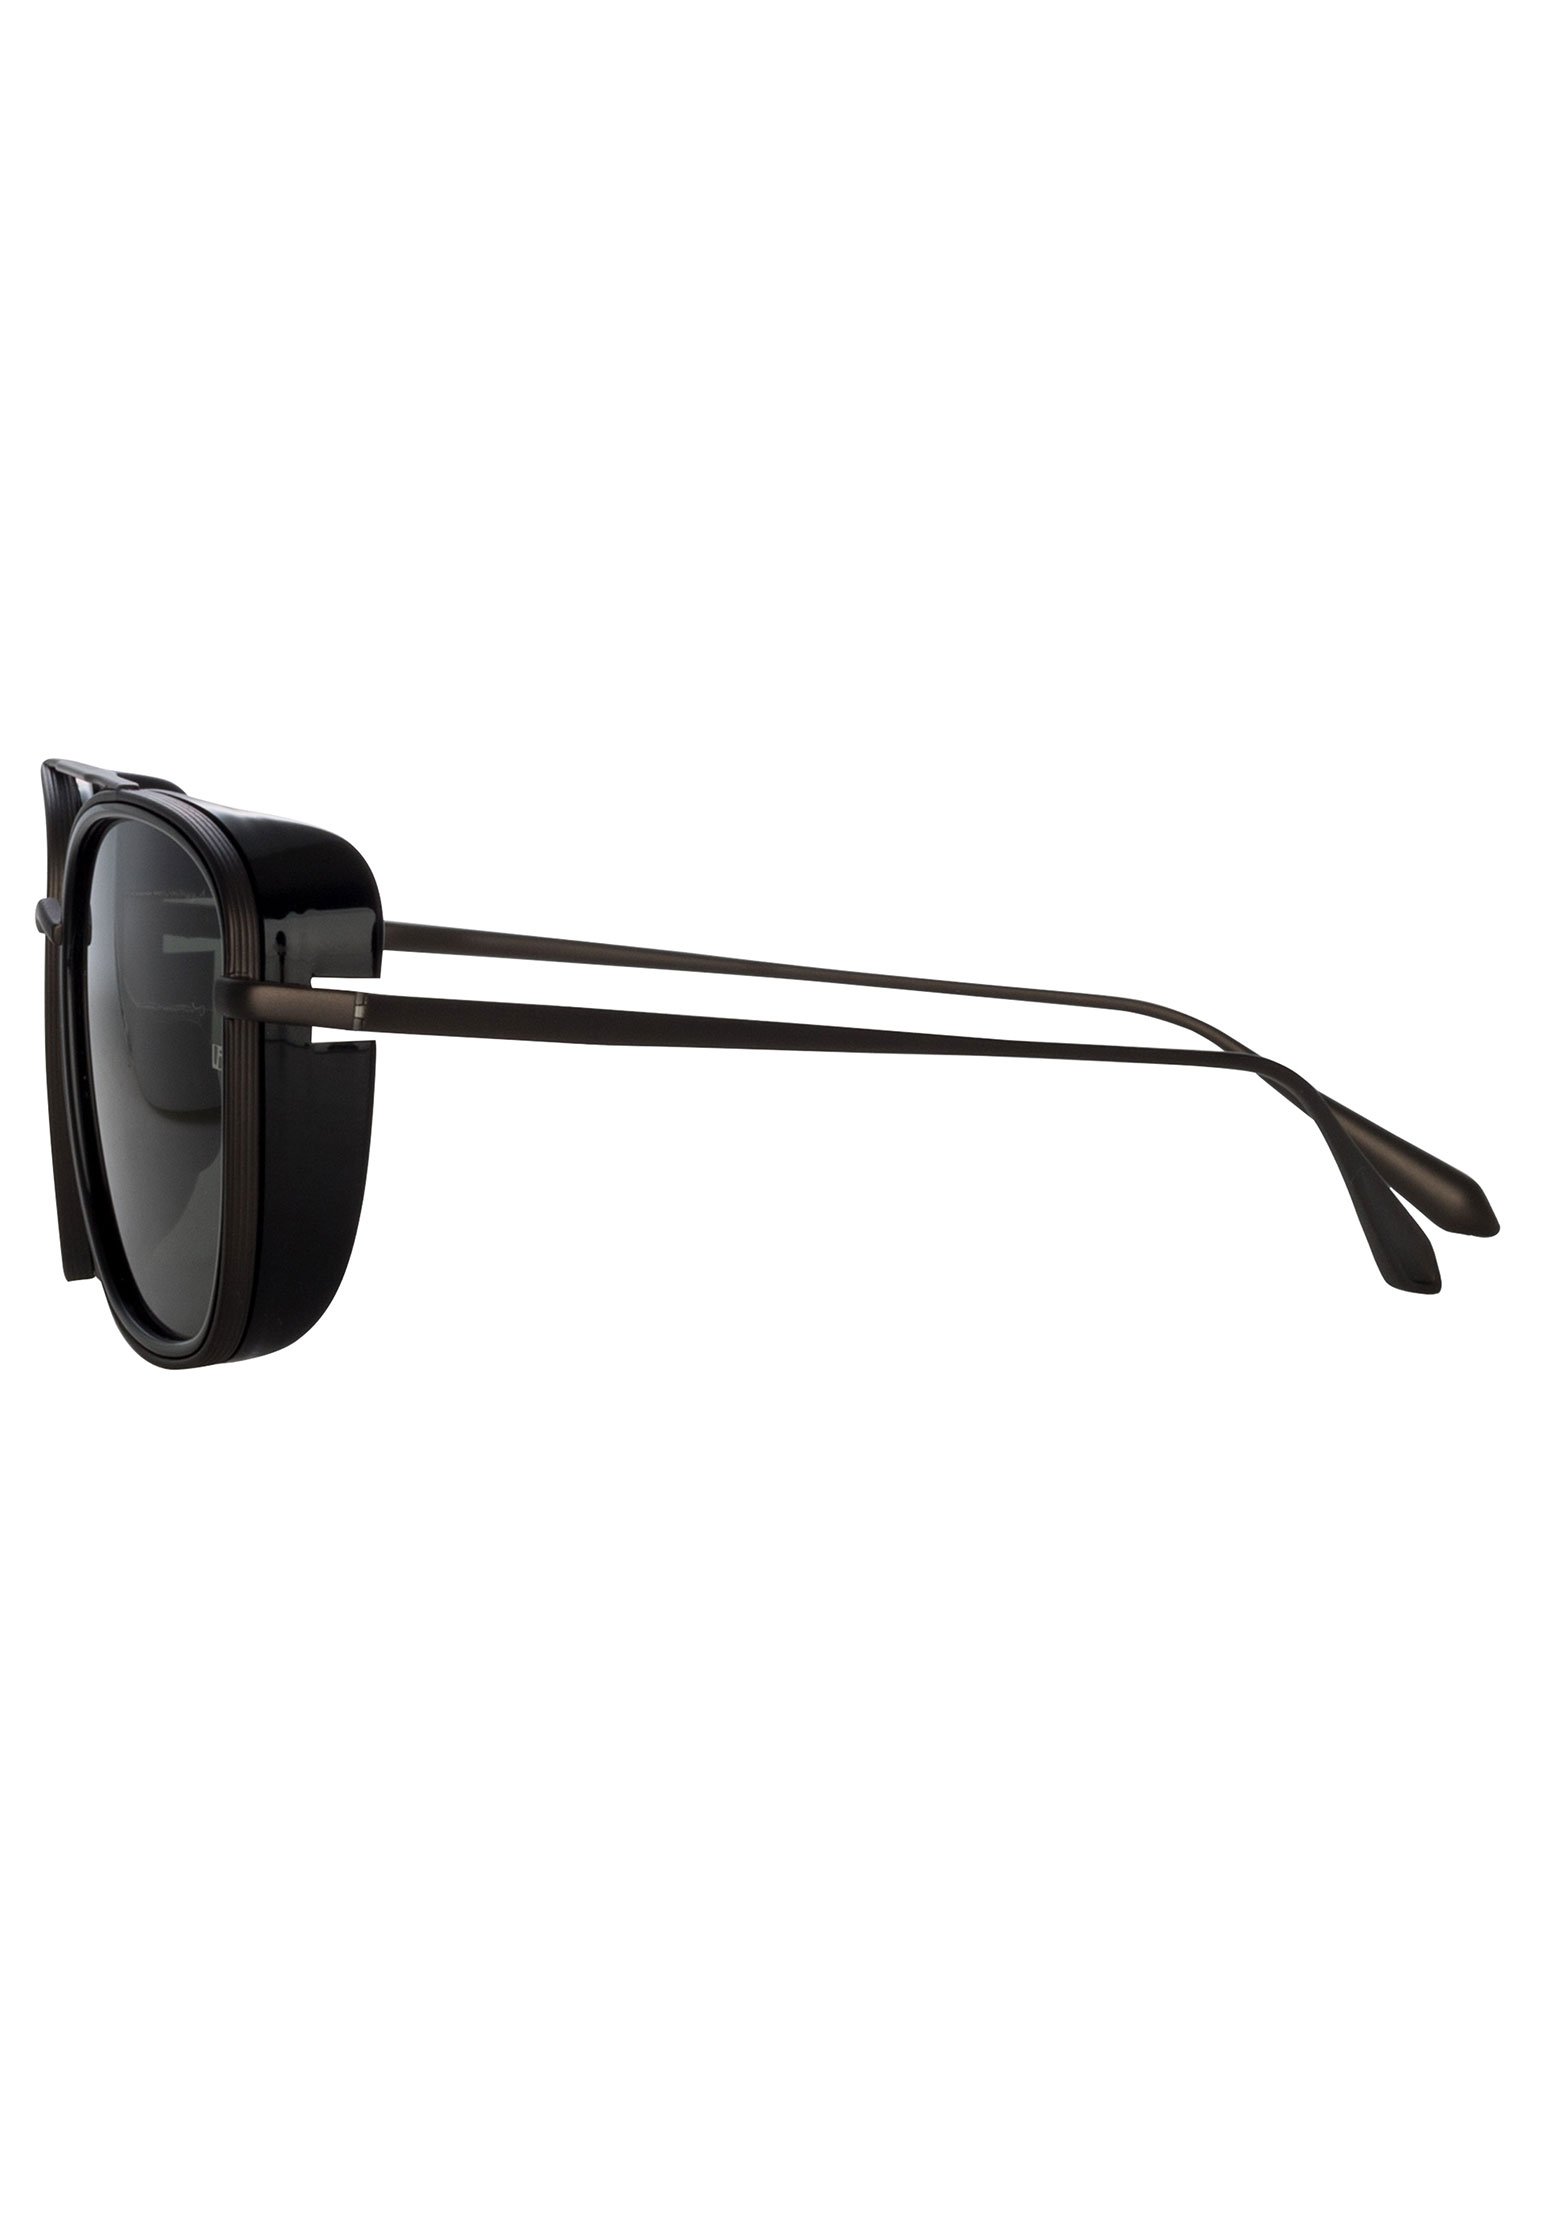 Sunglasses LINDA FARROW Color: black (Code: 4030) in online store Allure